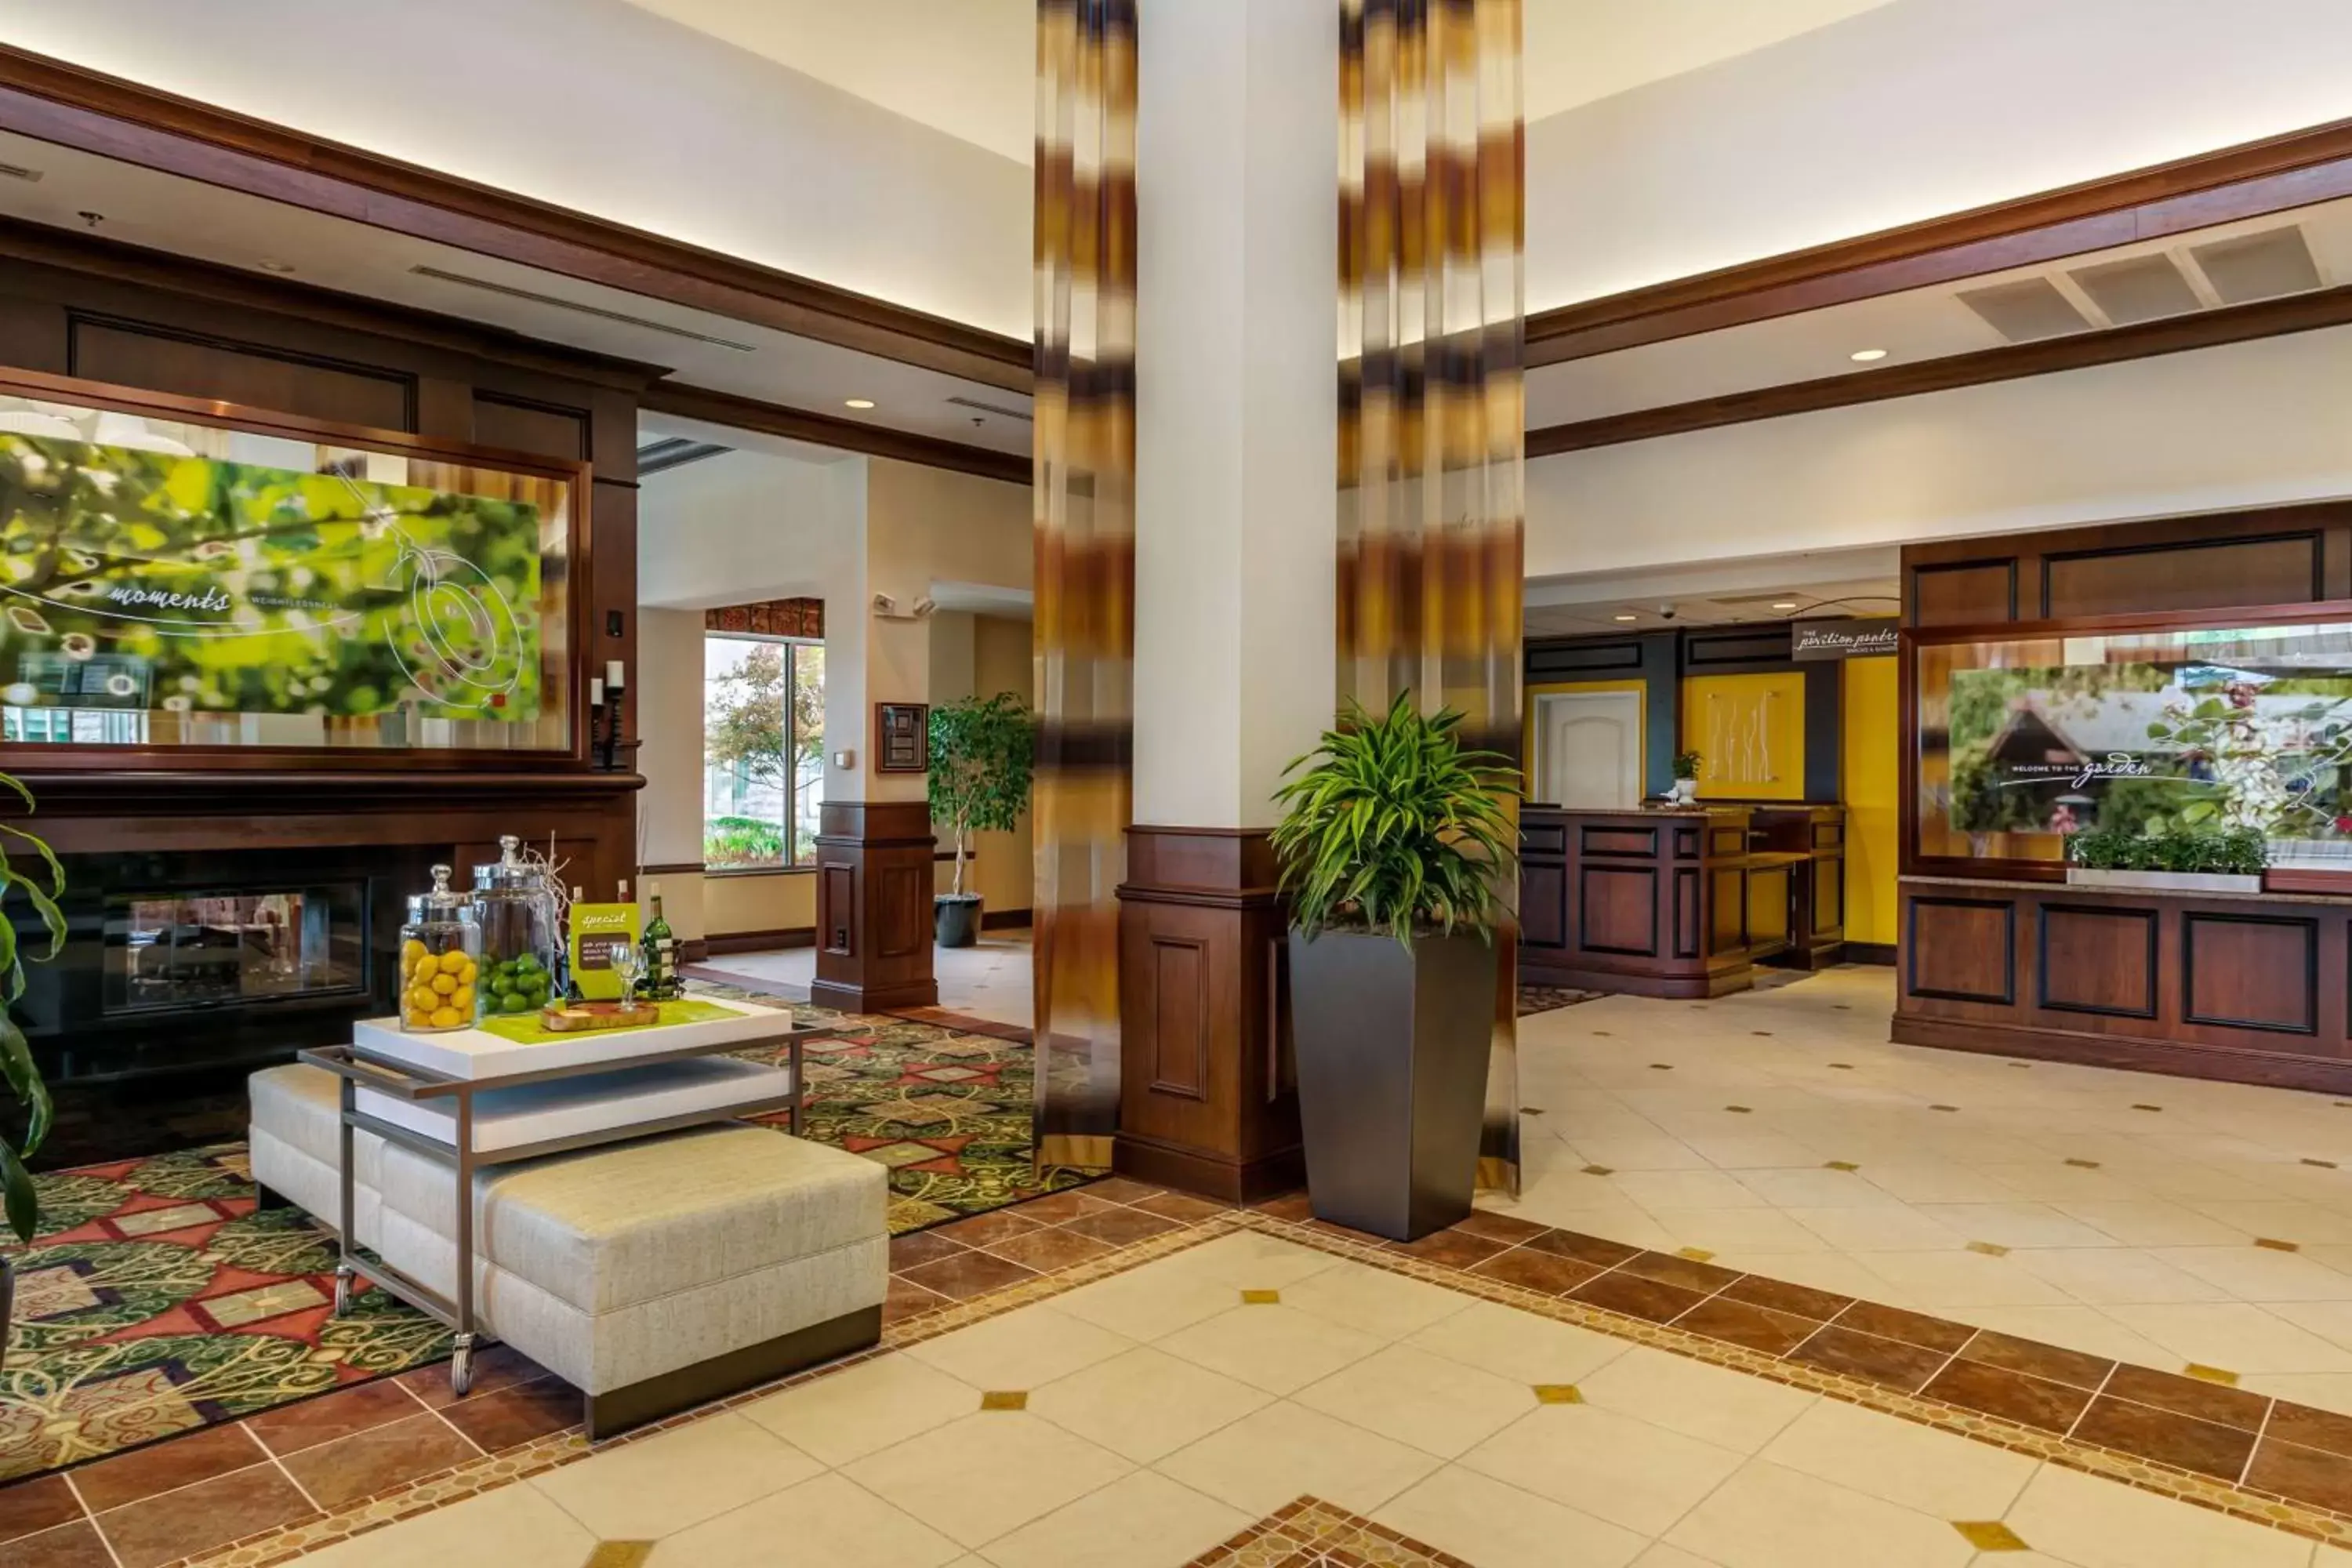 Lobby or reception, Lobby/Reception in Hilton Garden Inn Cleveland East / Mayfield Village